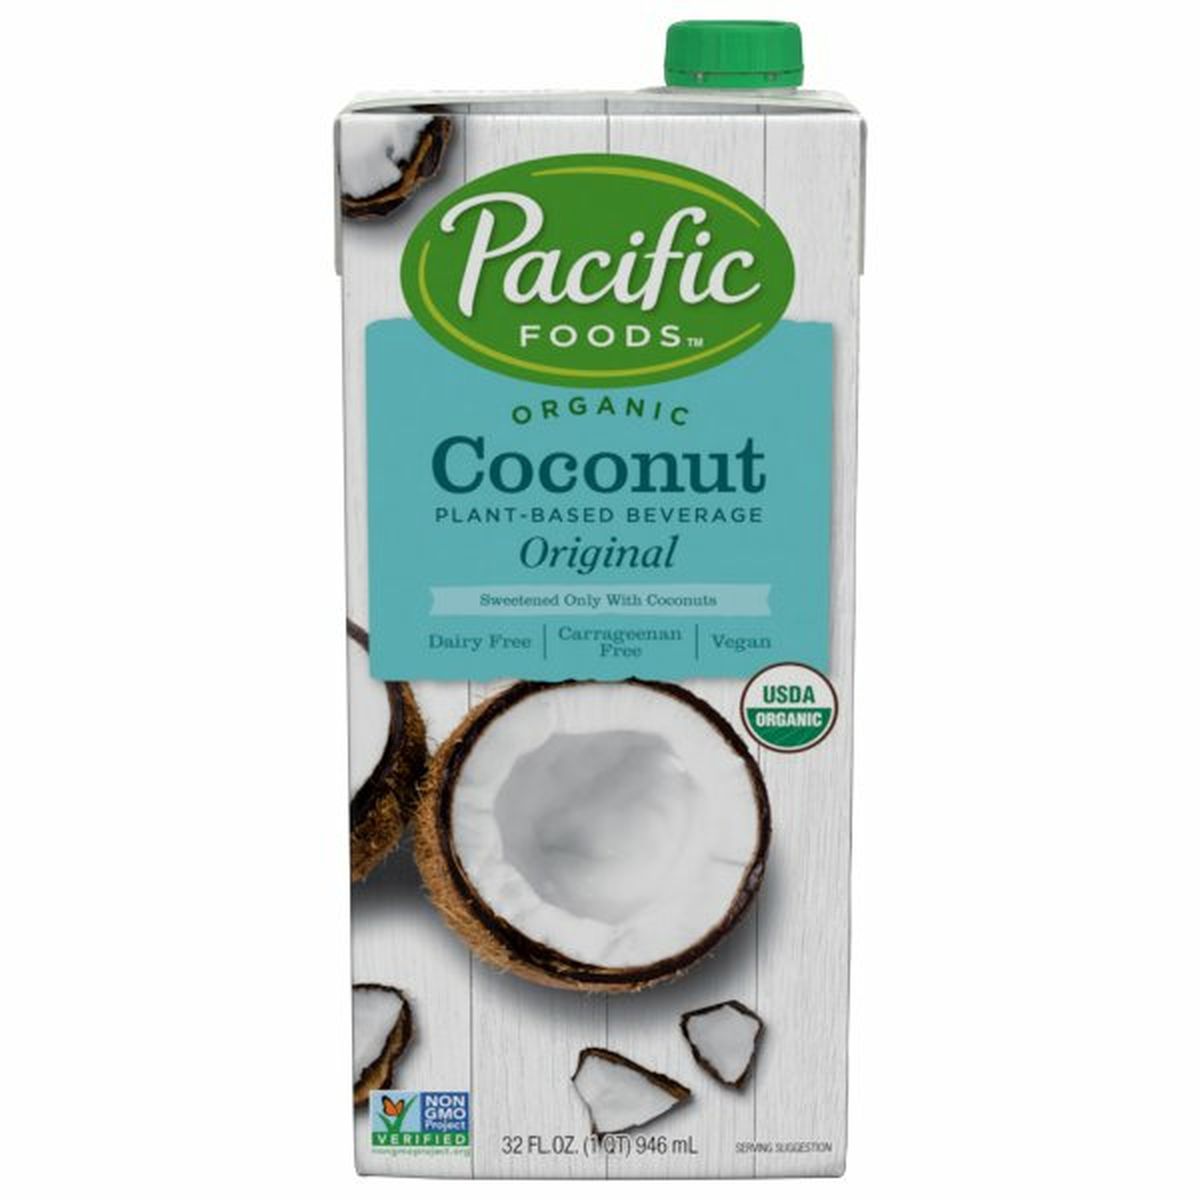 Calories in Pacific Plant-Based Beverage, Coconut, Organic, Original